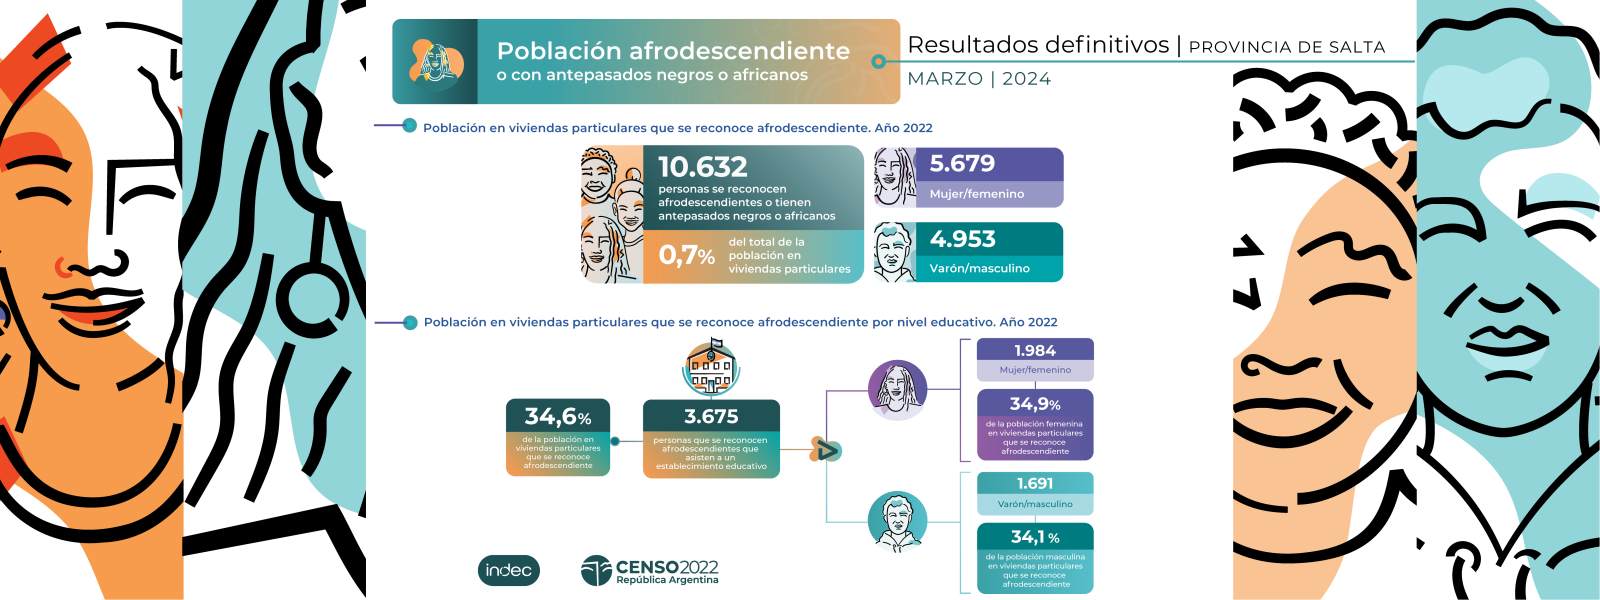 Censo 2022 - Población Afrodescendiente. Provincia de Salta